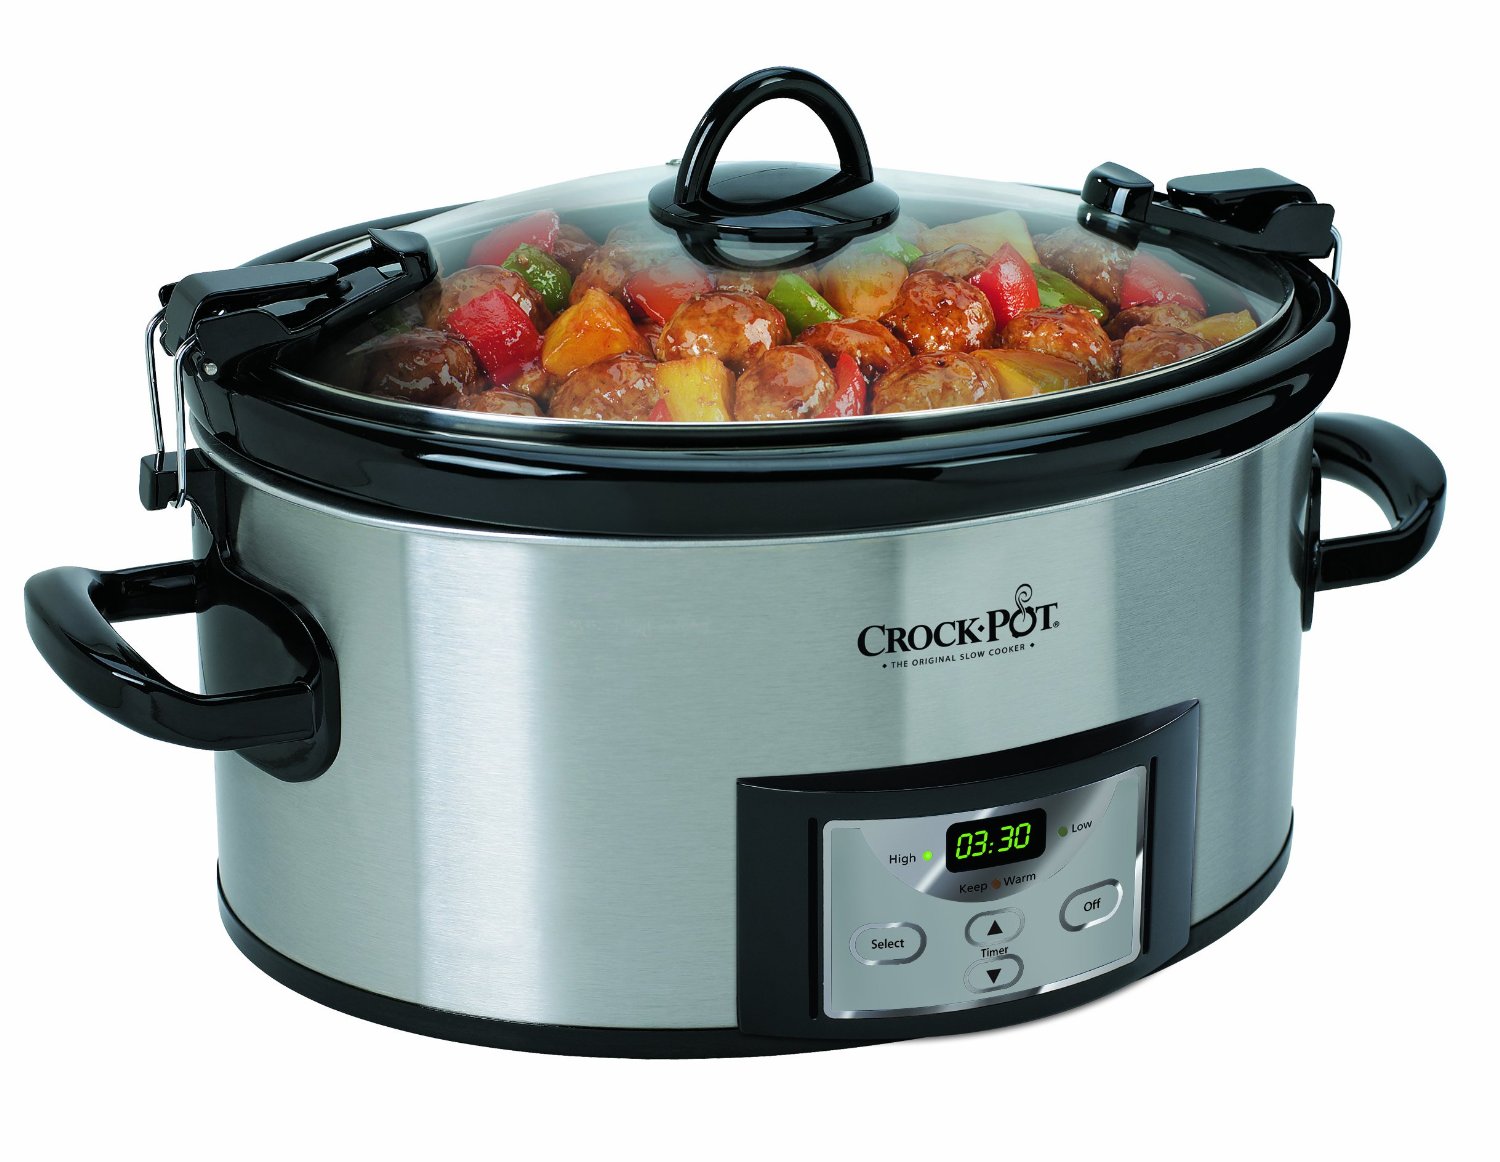 Prime Day Deal – Crock-Pot 6-Quart Programmable Cook & Carry Slow Cooker with Digital Timer – Just $31.99!